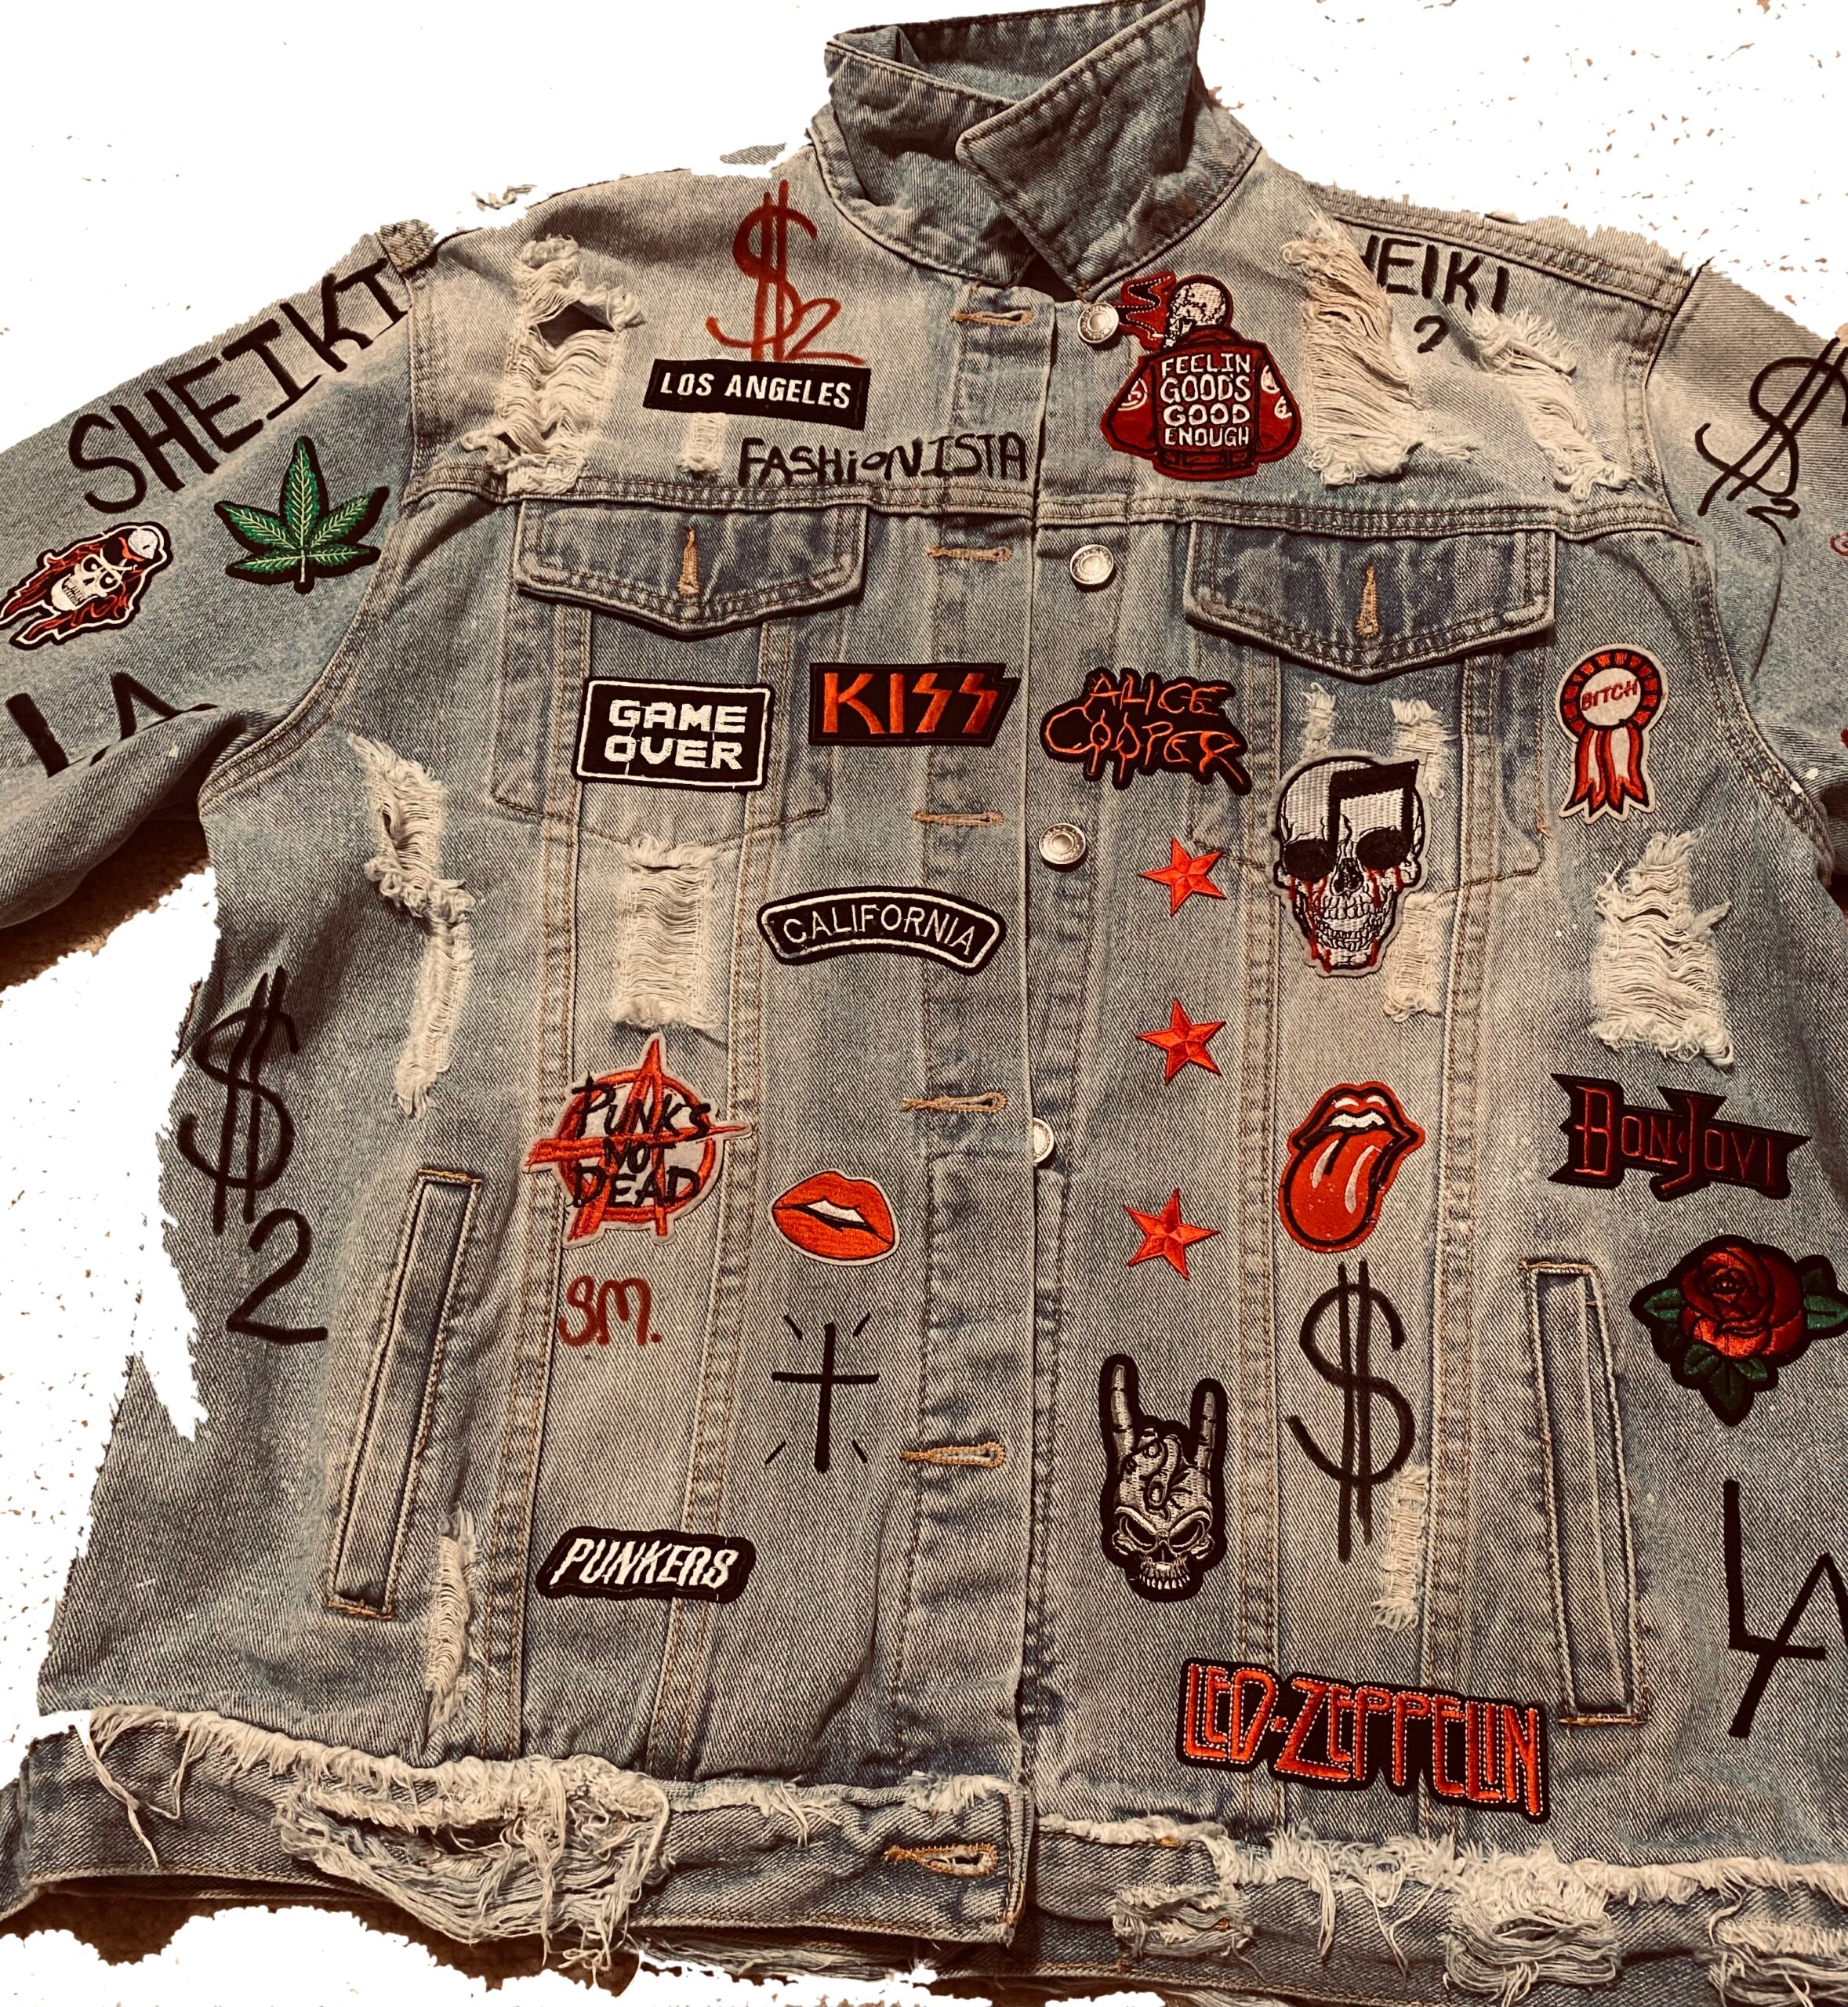 Rockstar "Limited Edition" Denim Jacket